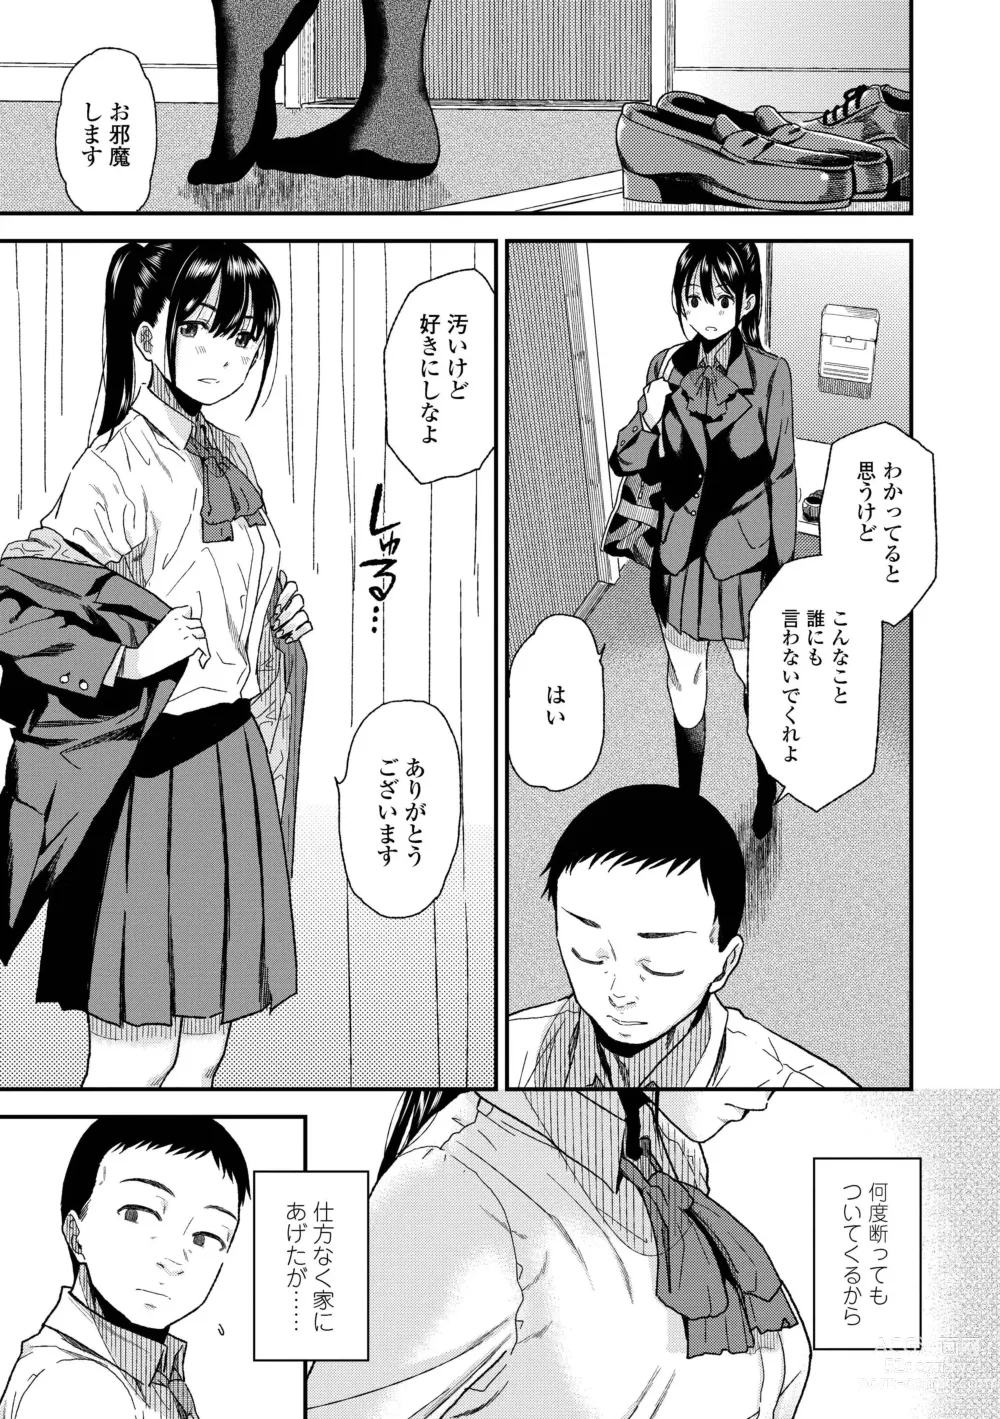 Page 7 of manga BorderLine